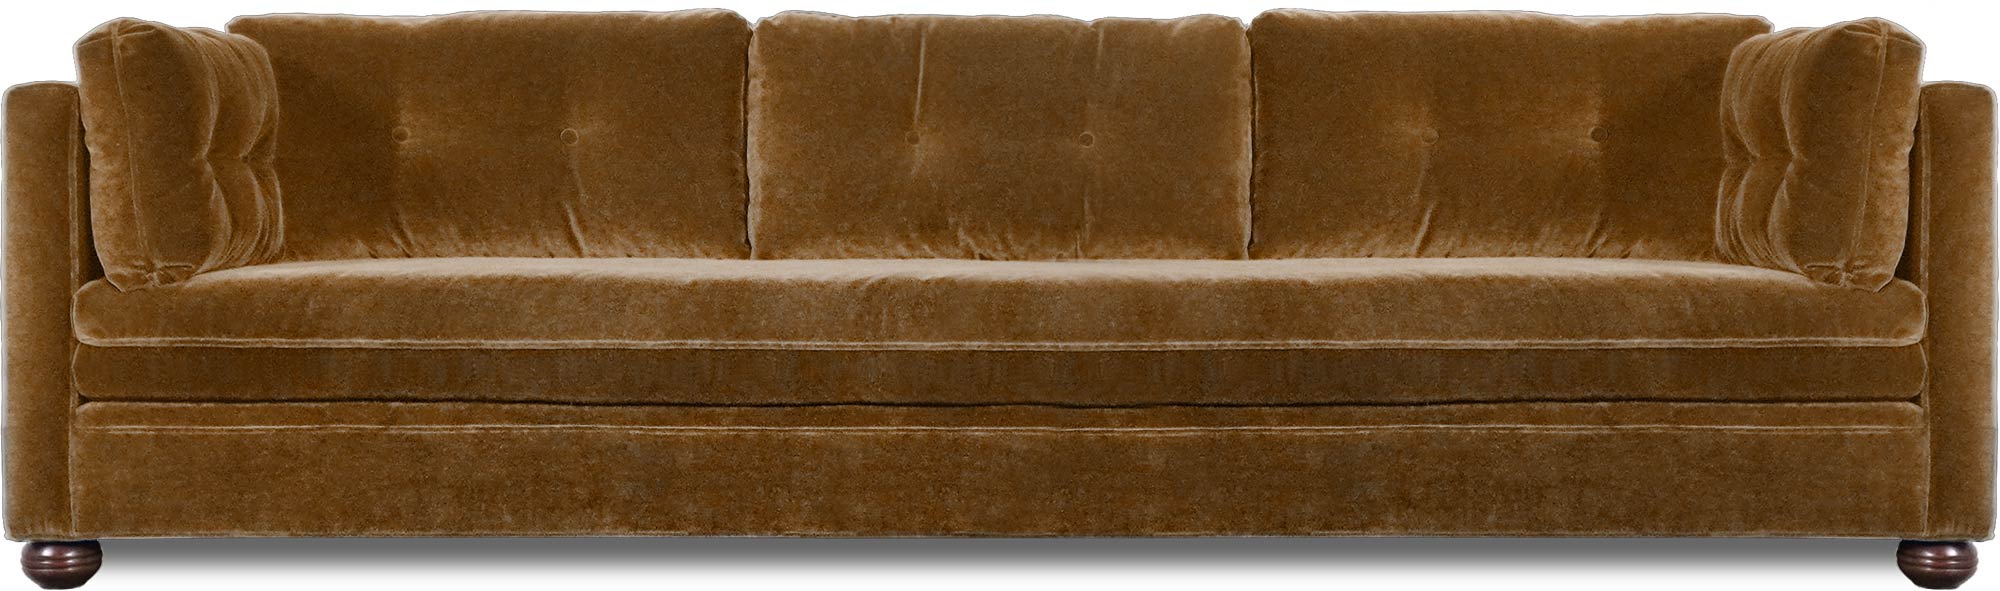 107 Greta Turkish sofa in Nevada Camel mohair